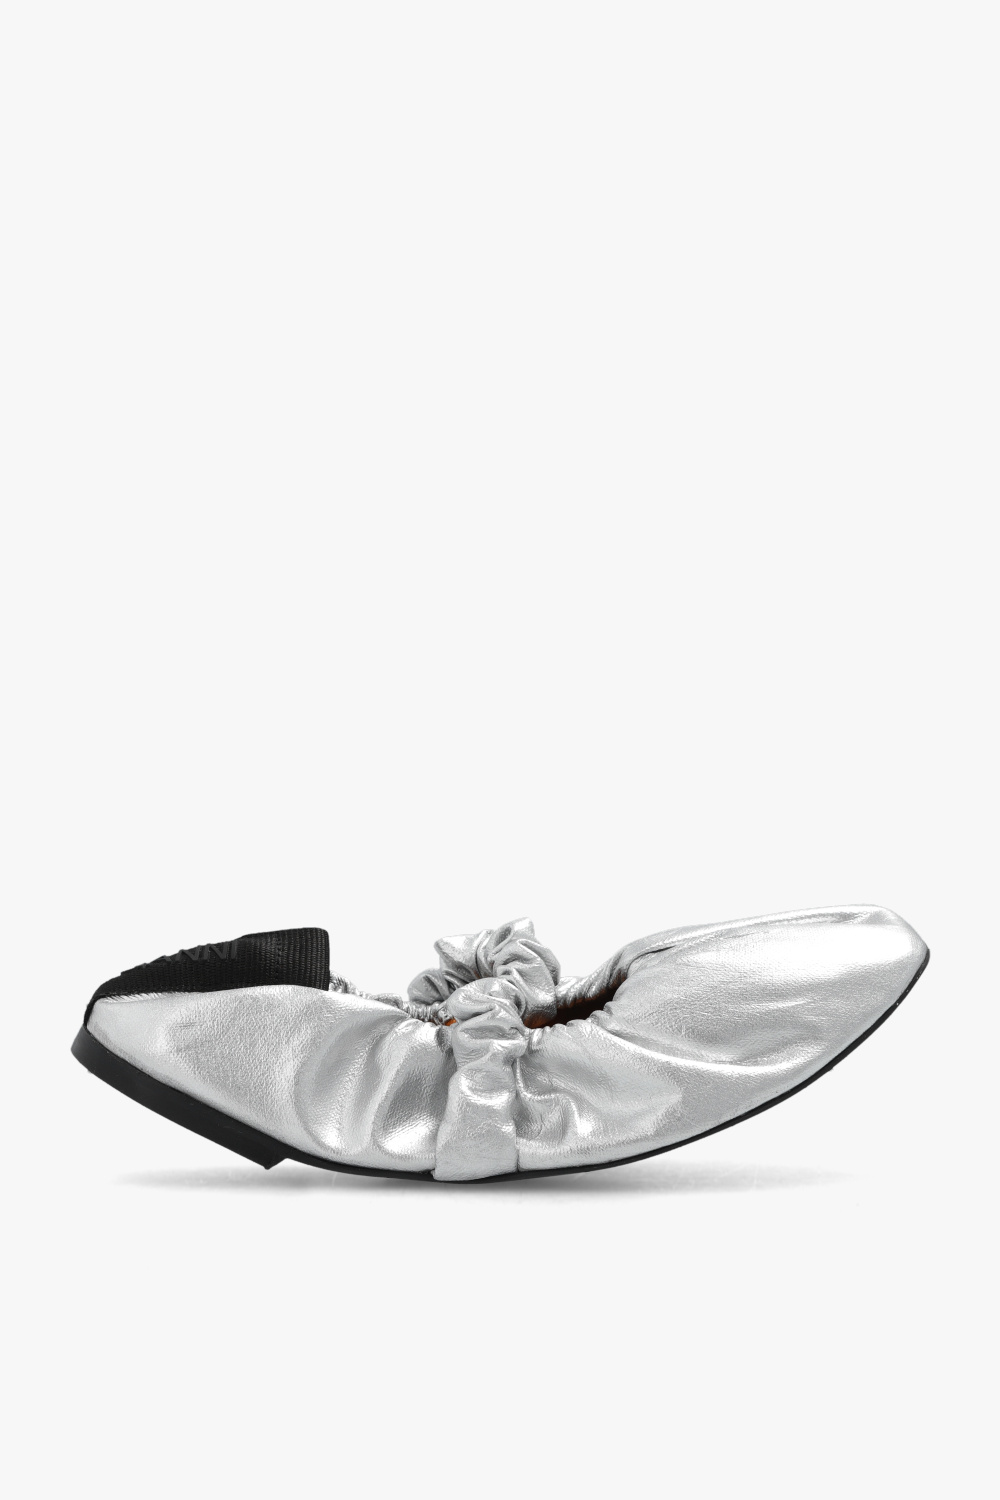 Ganni Elba strapped into a slick set of heeled sandals